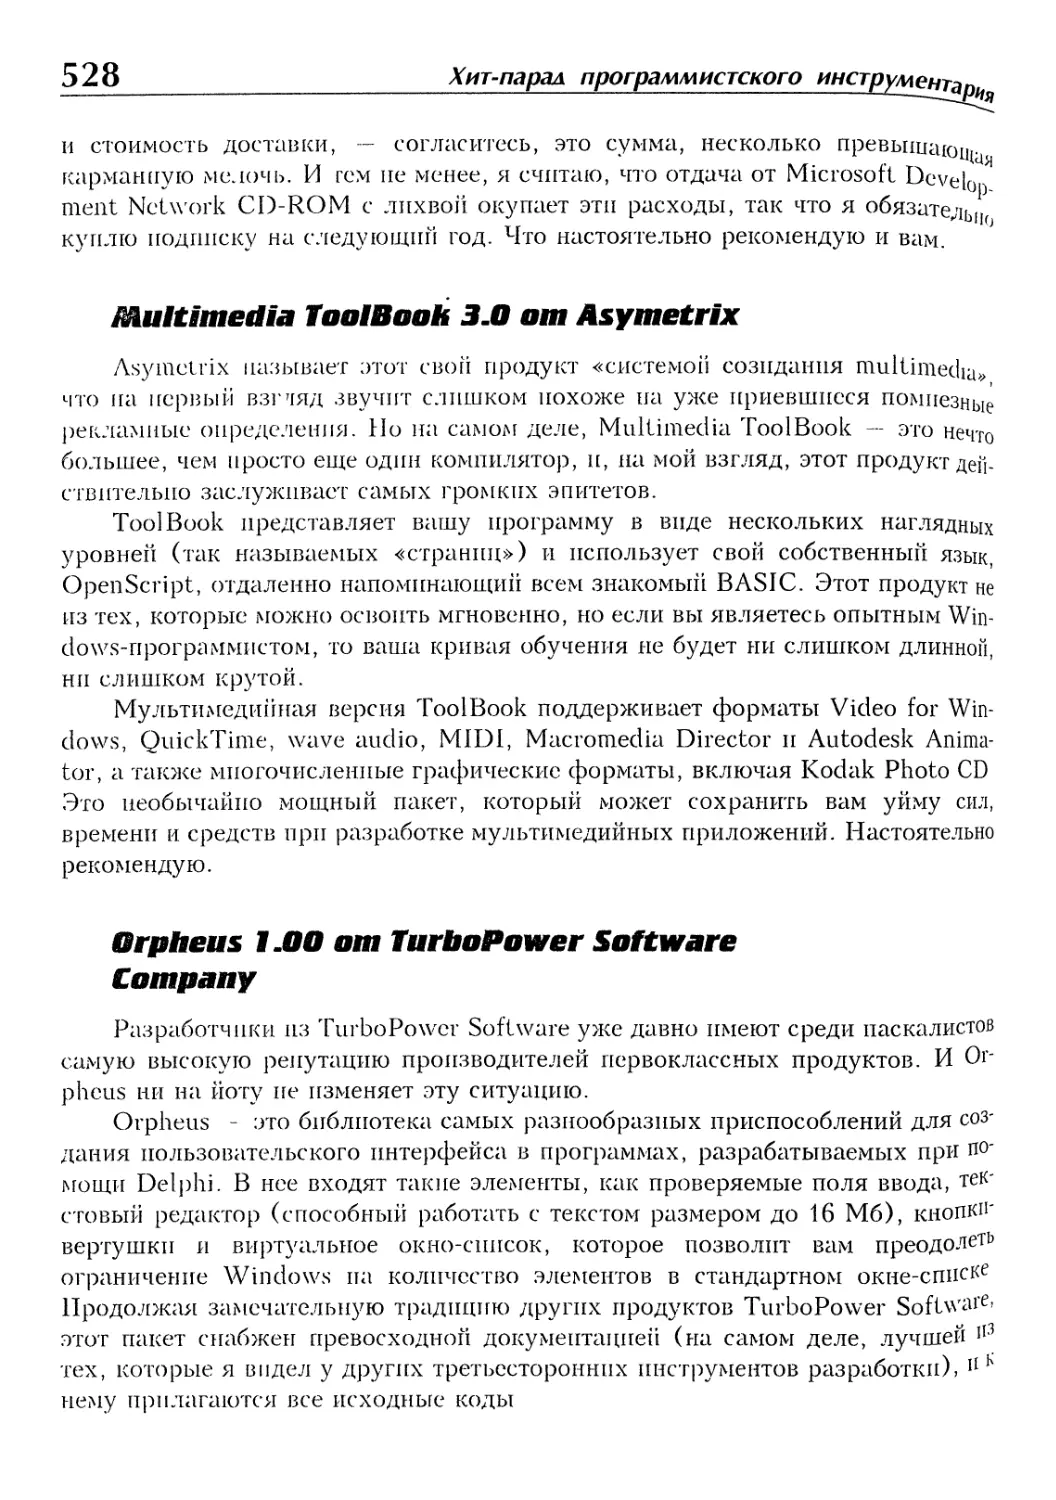 Multimedia ToolBook 3.0 от Asymetrix
Orpheus 1.00 от TurboPower Software Company